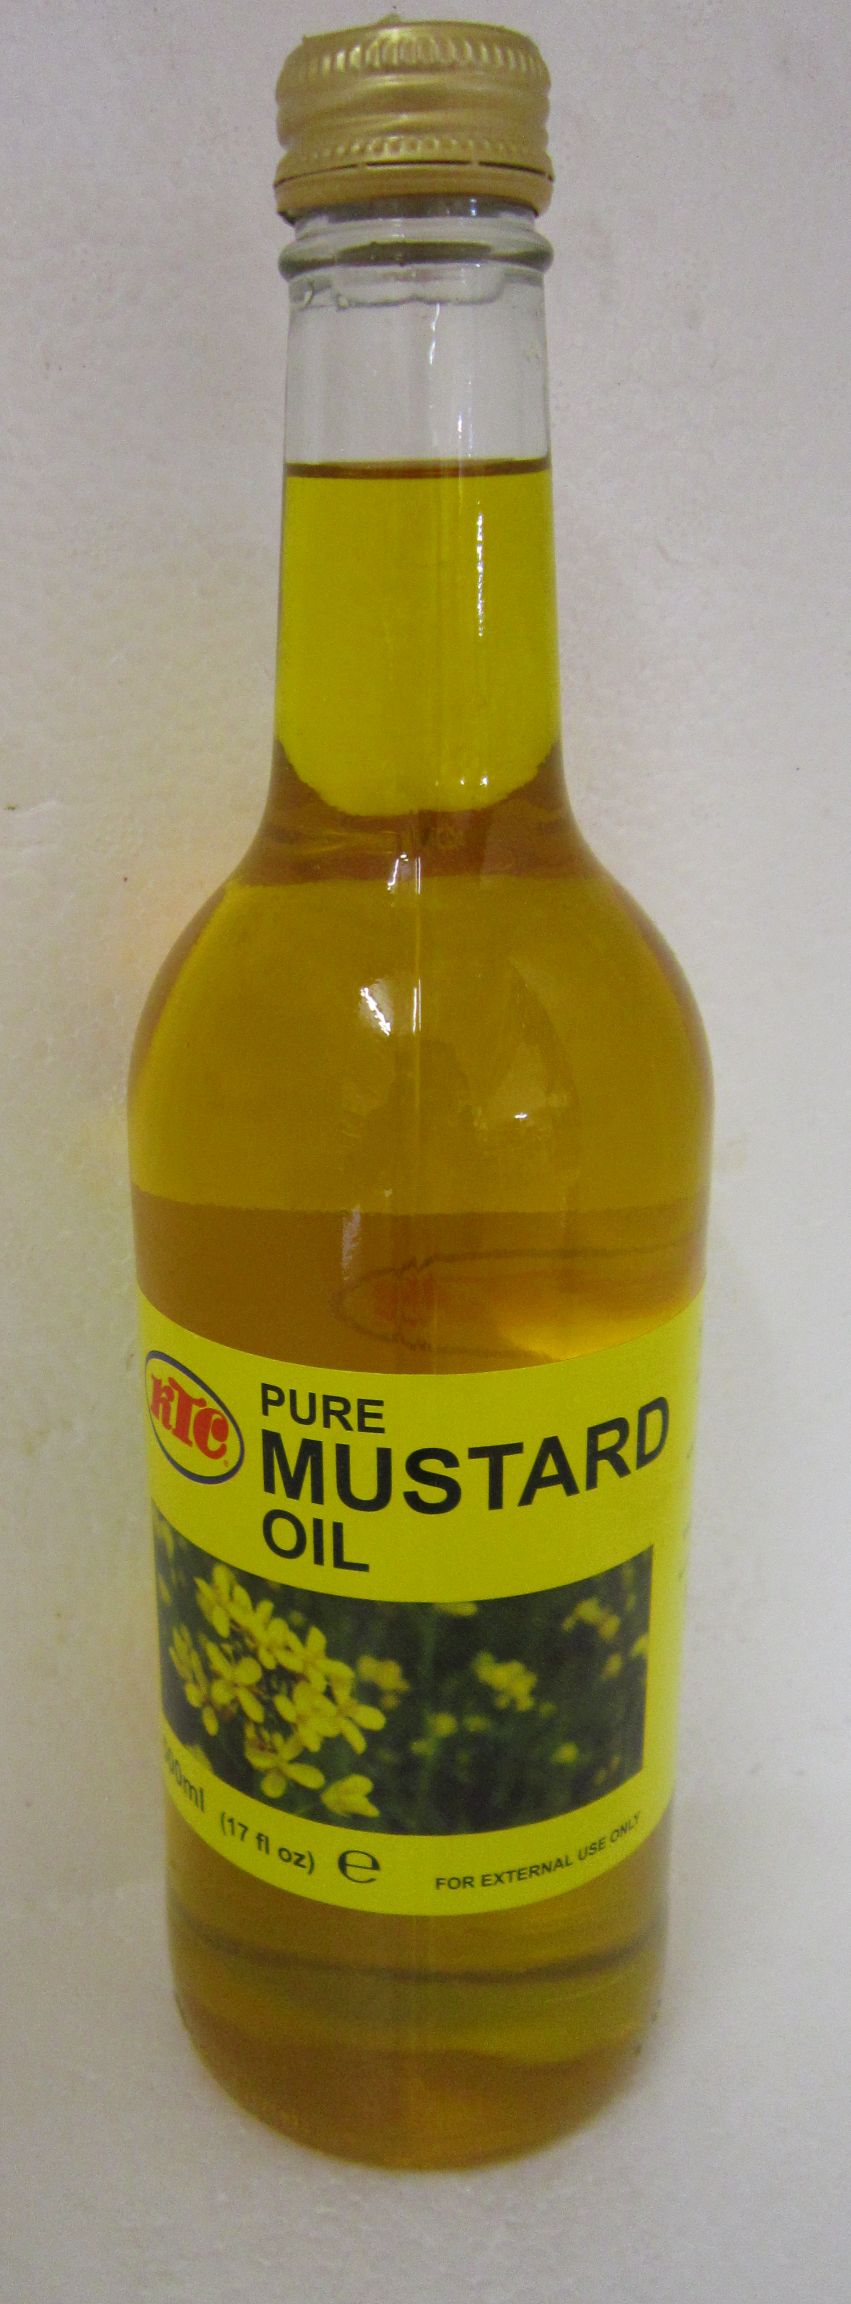 KTC Pure Mustard Oil Image